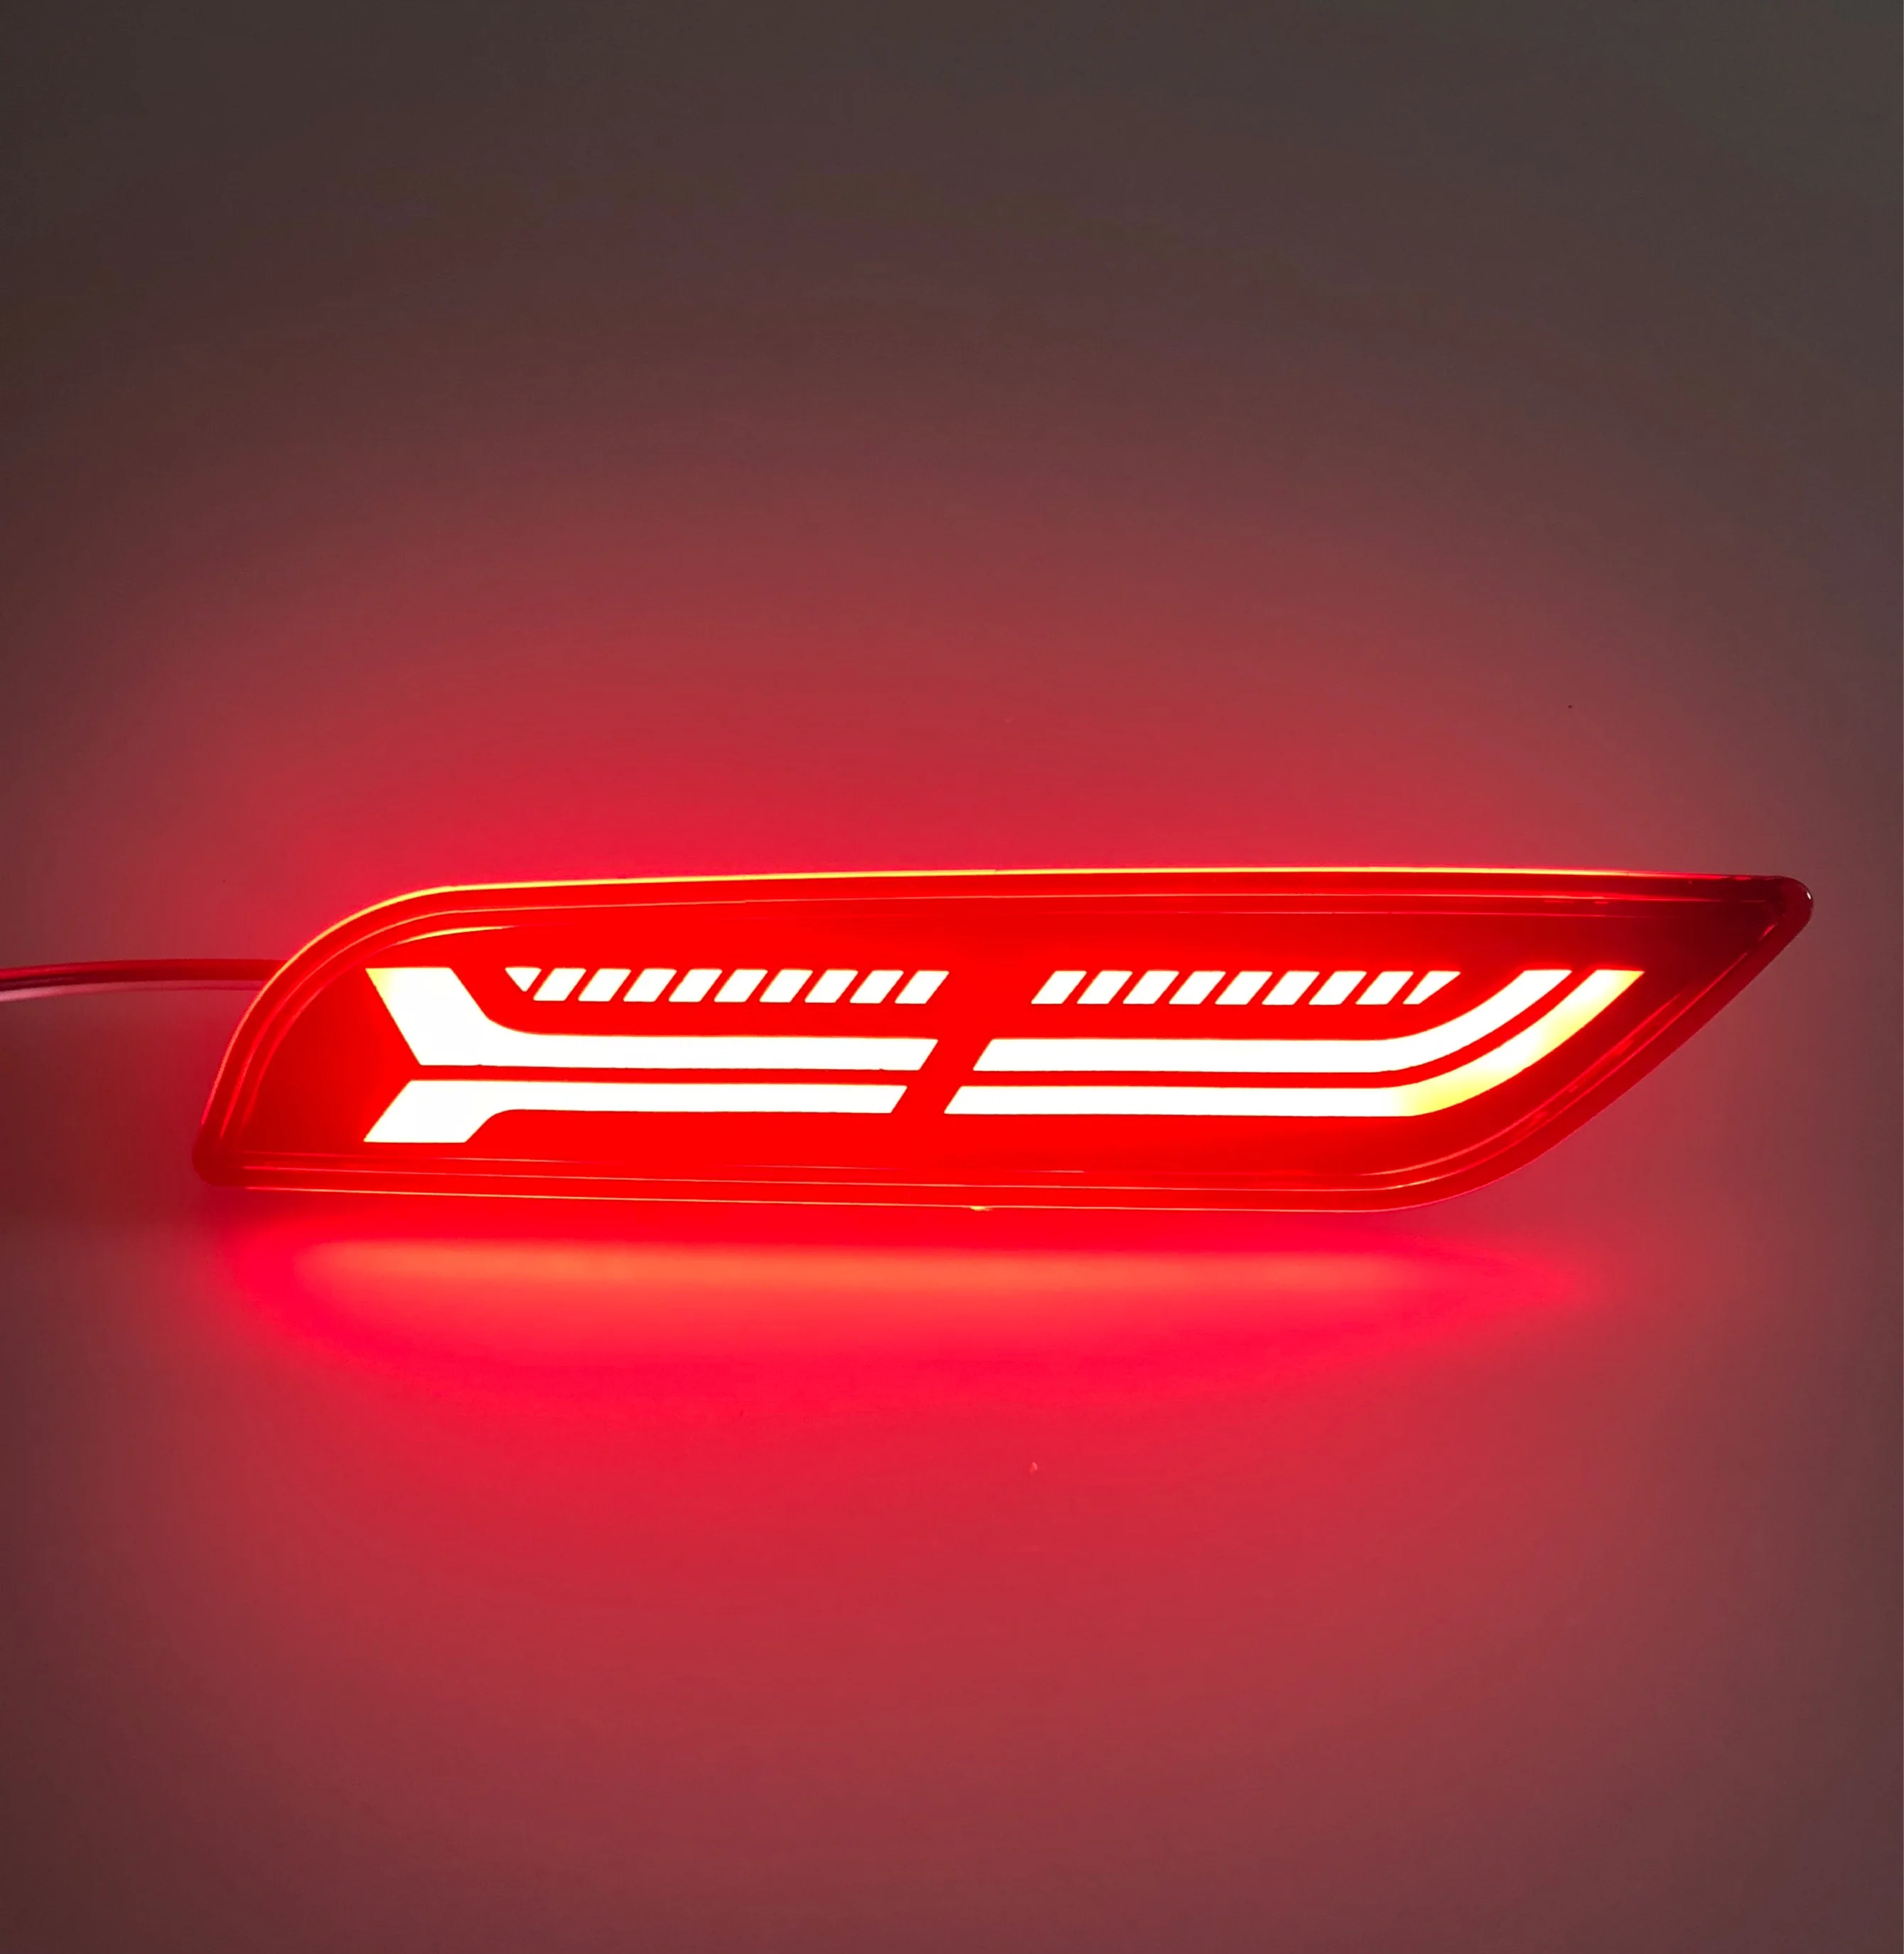 

Led reflector light rear bumper lamp tail lamp for CRETA IX25 2018 2019, Red